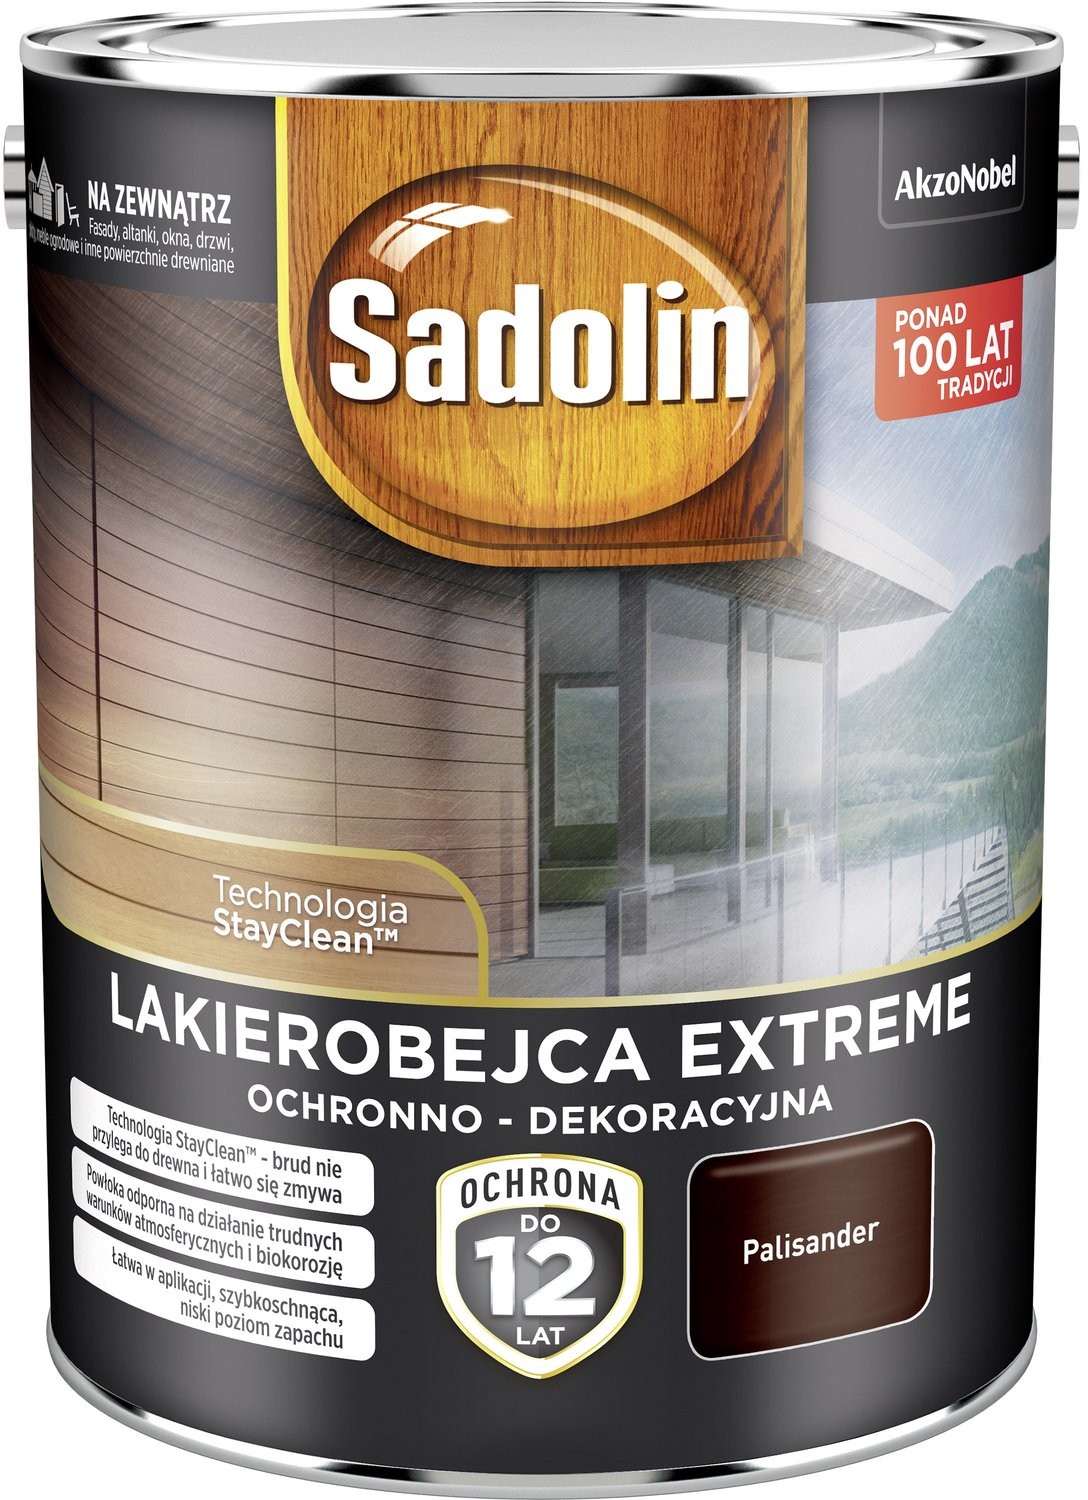 Sadolin Lakierobejca Extreme palisander 4,5 l